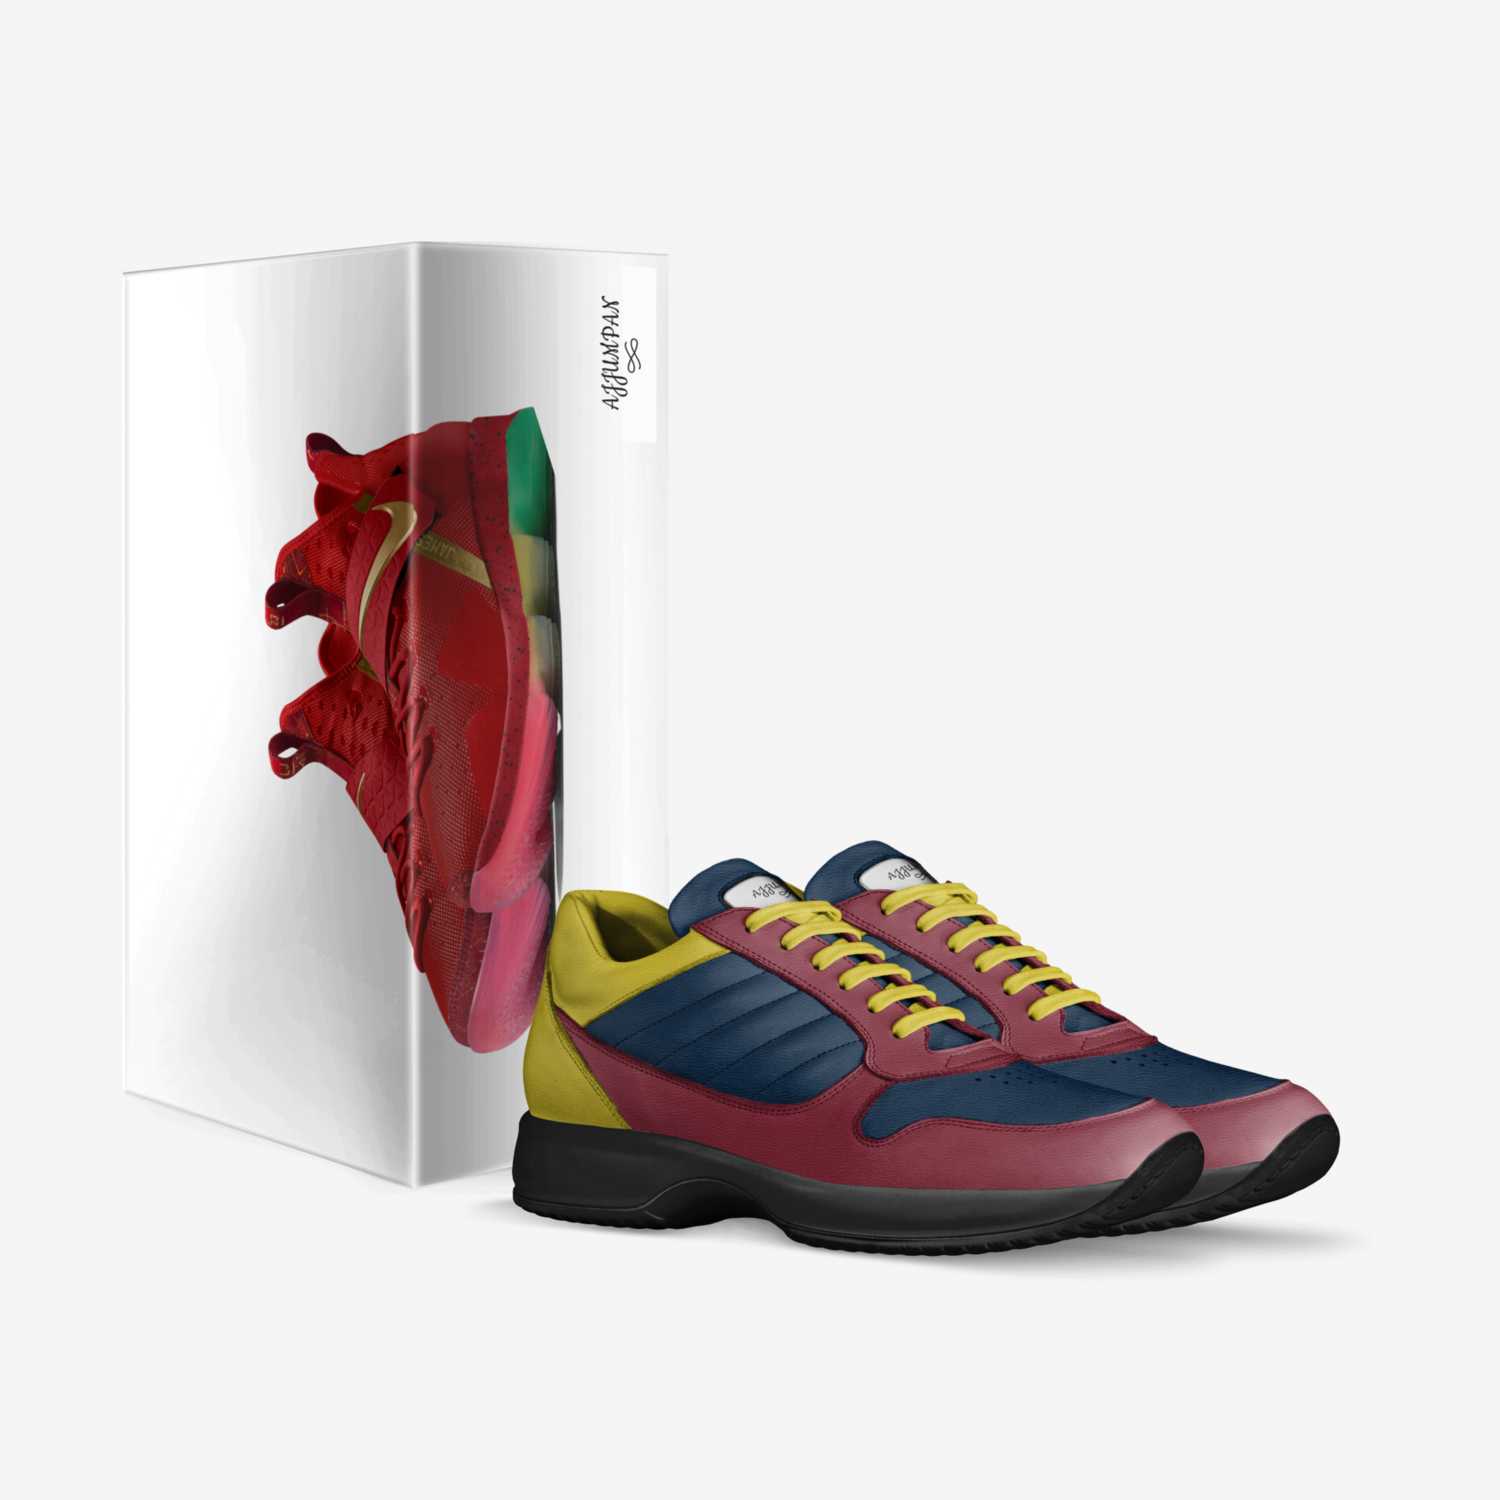 AJJUMPAN custom made in Italy shoes by Ayden Cruz Jones | Box view